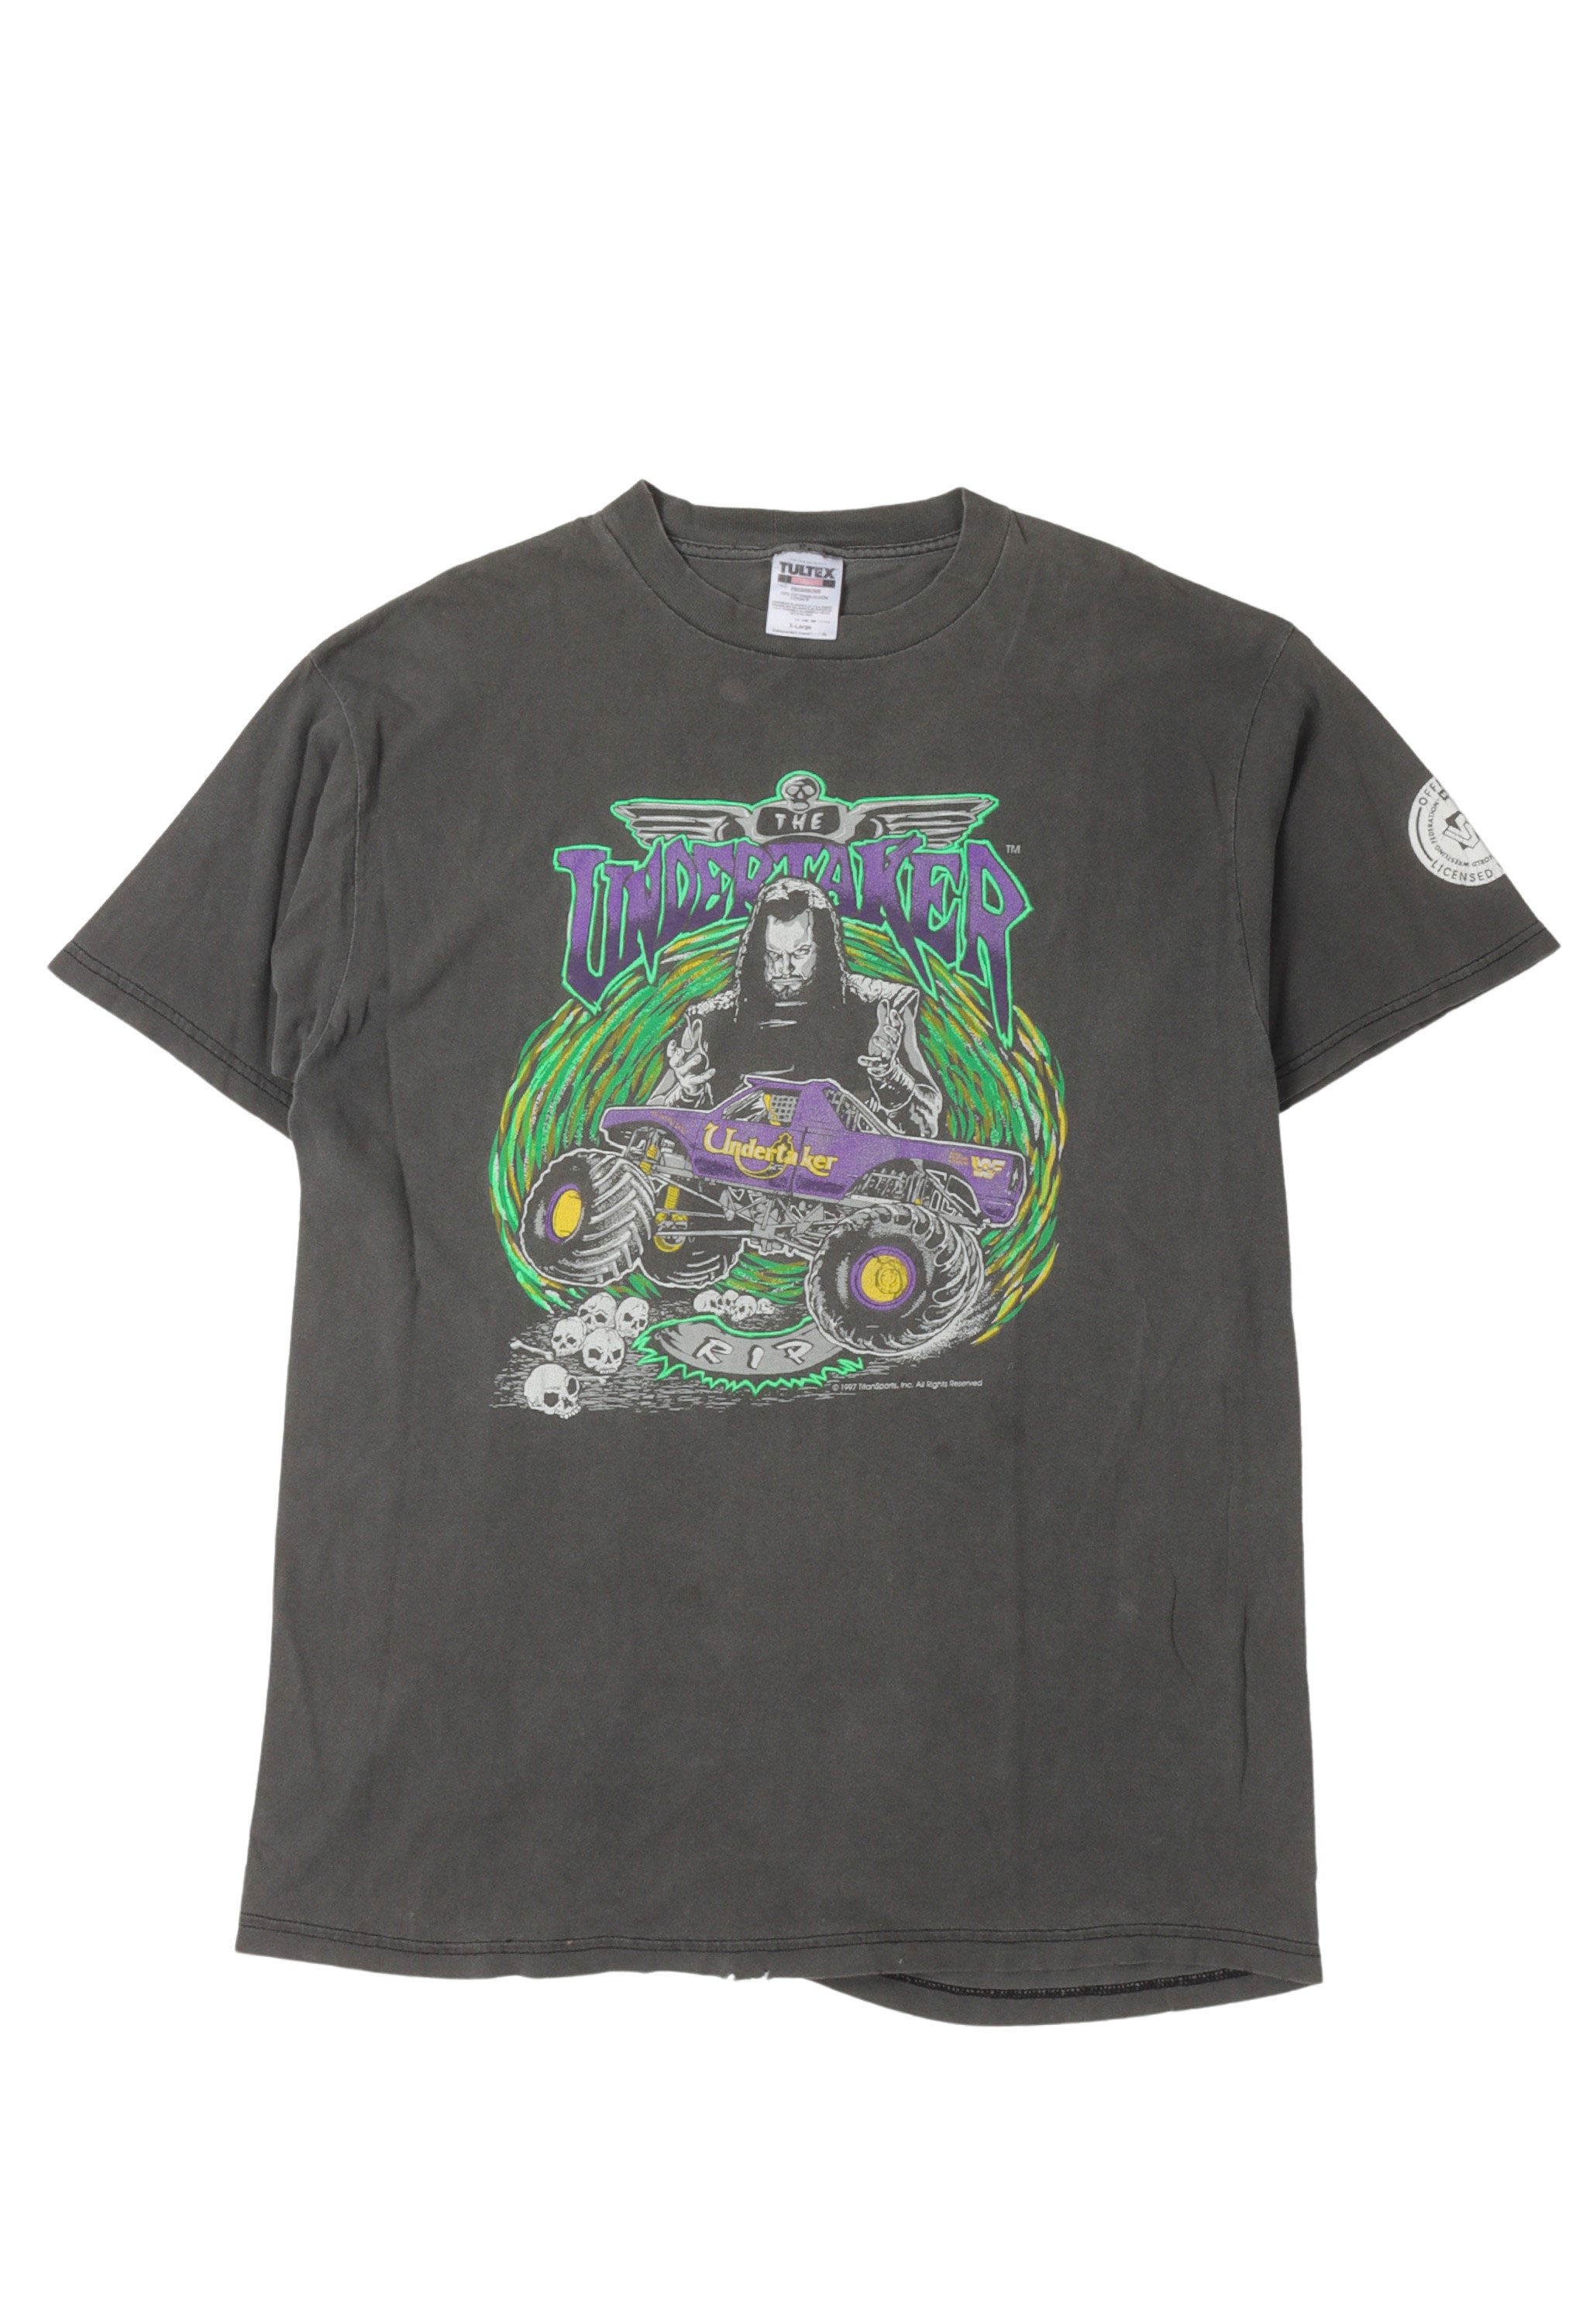 The Undertaker & Gravedigger T-Shirt